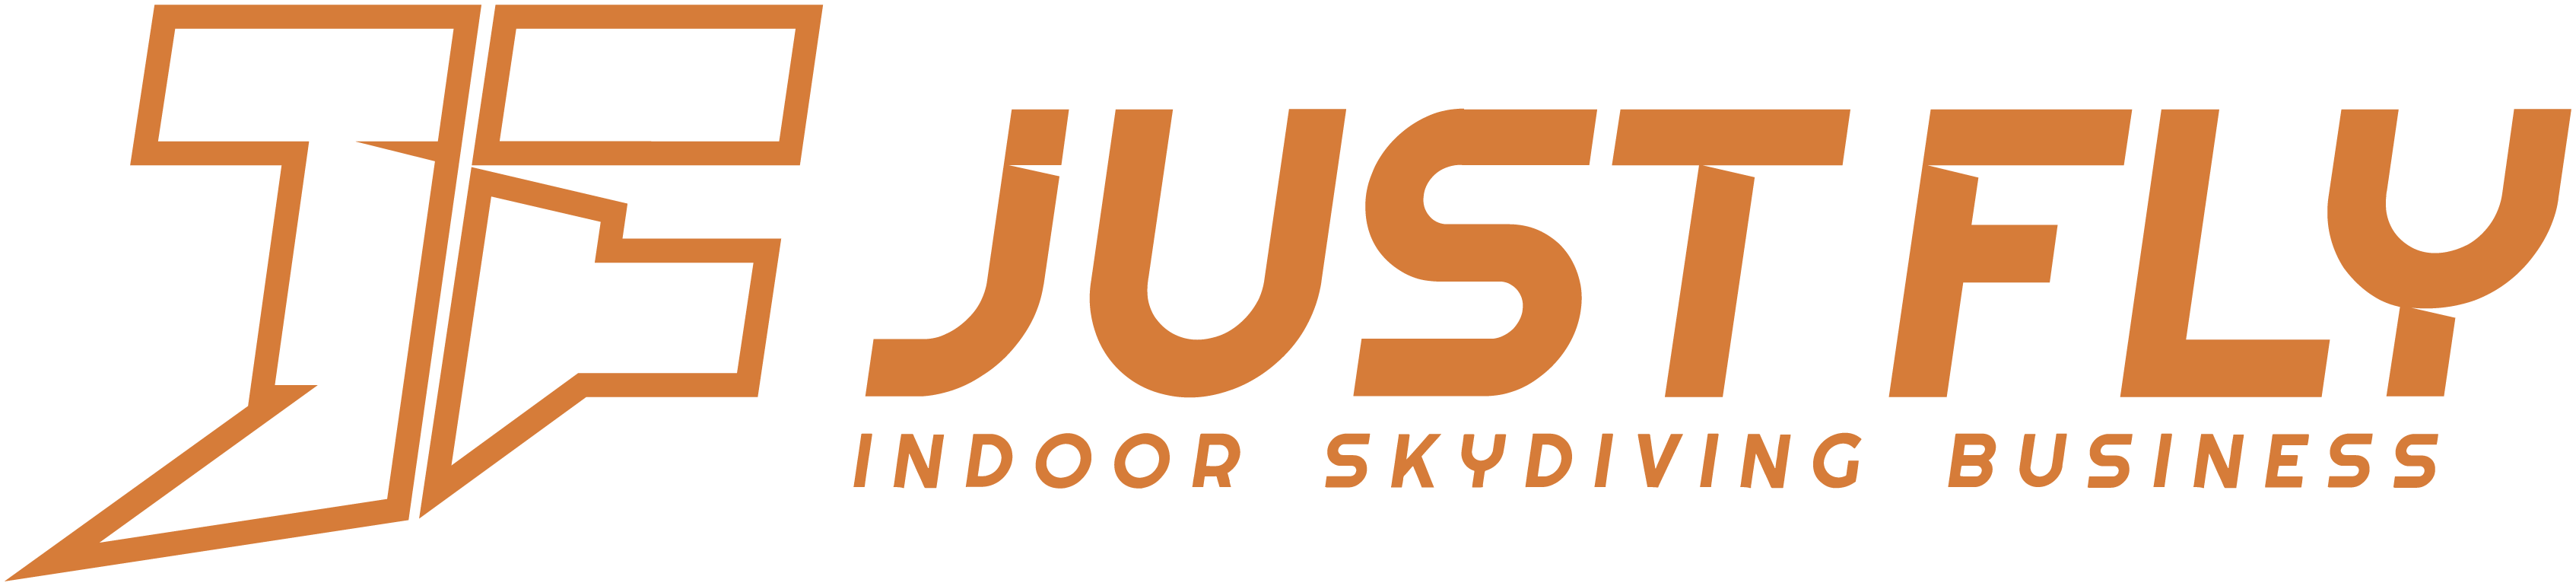 indoor skydiving business platform